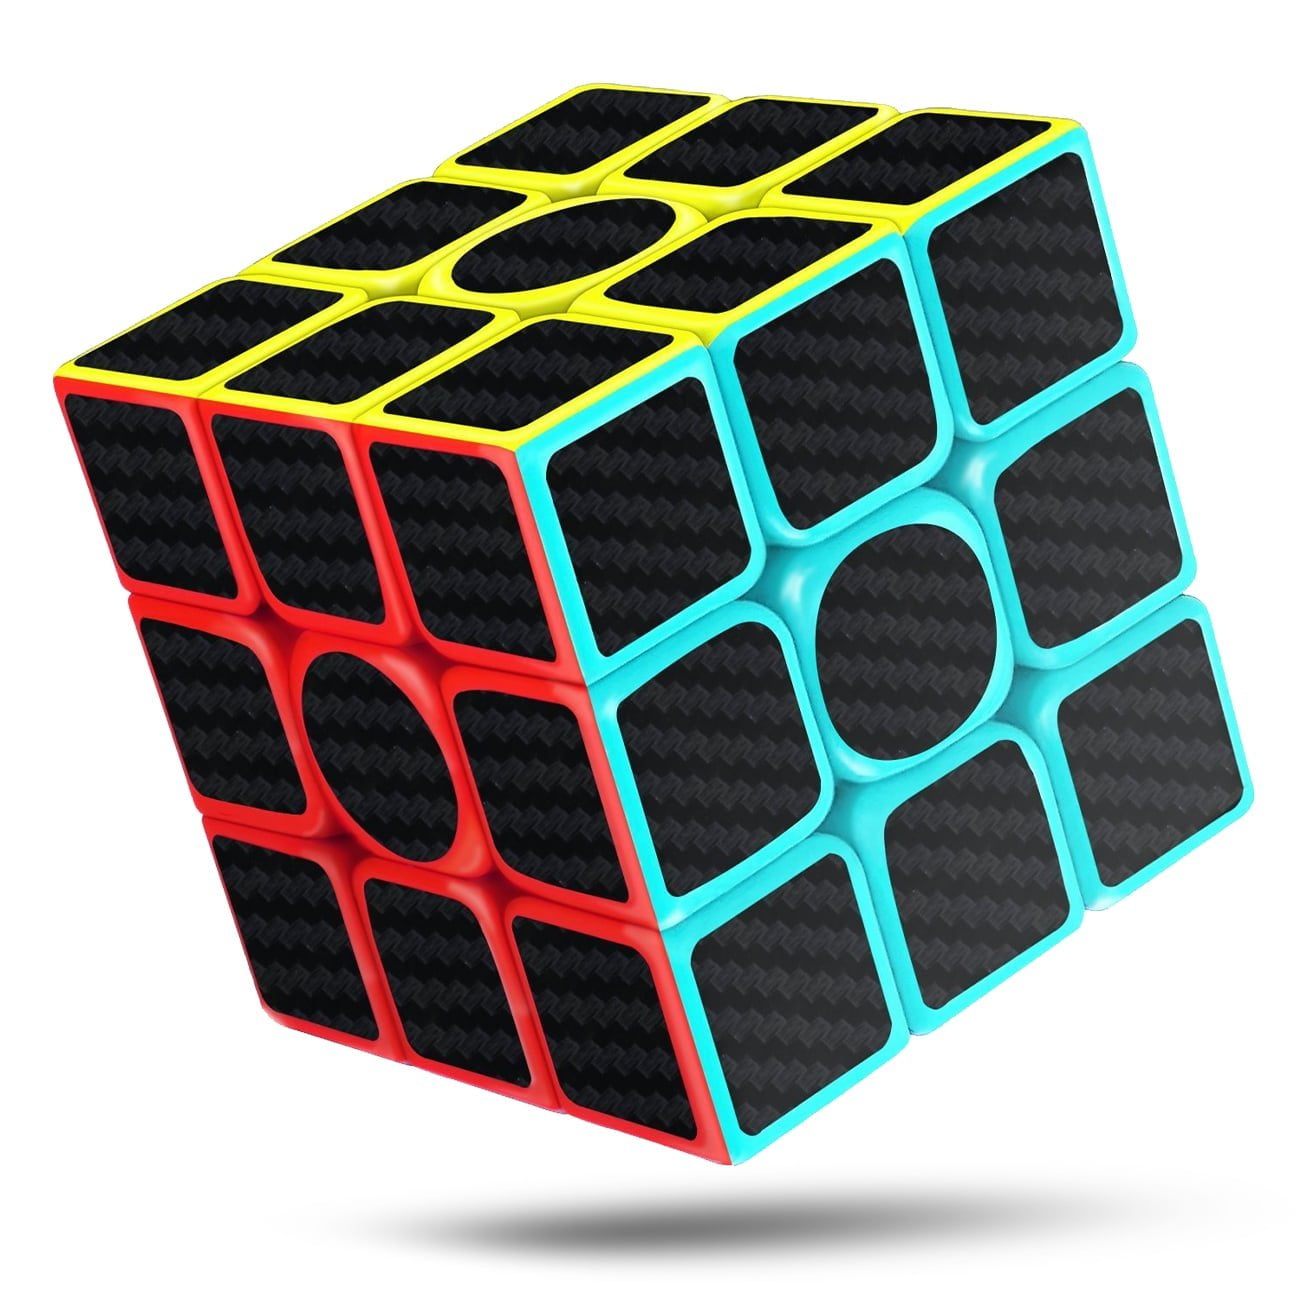 Rubik's Cube Magic Cube Smooth Fast Speed Rubix Rubiks Puzzle Teen Kids Gifts 